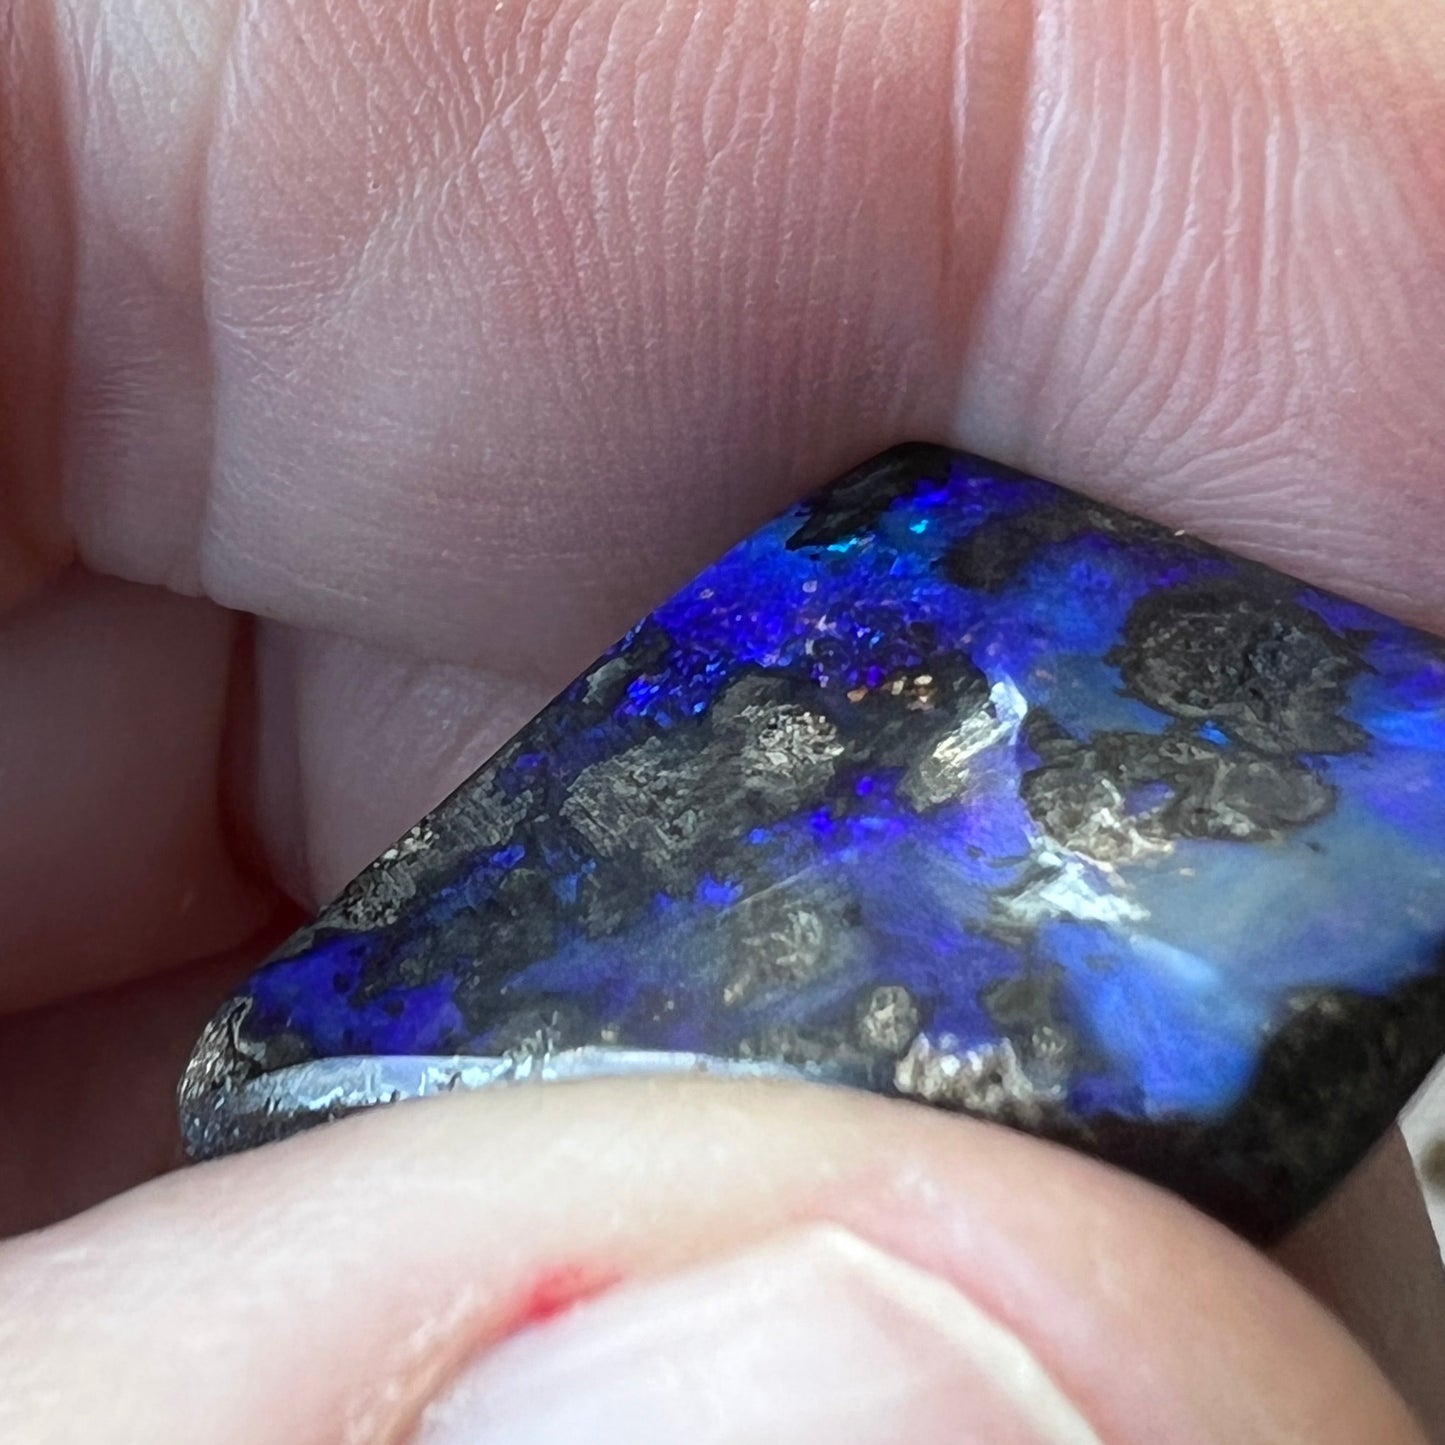 An unusual shaped piece of Winton boulder opal, showing beautiful blues.